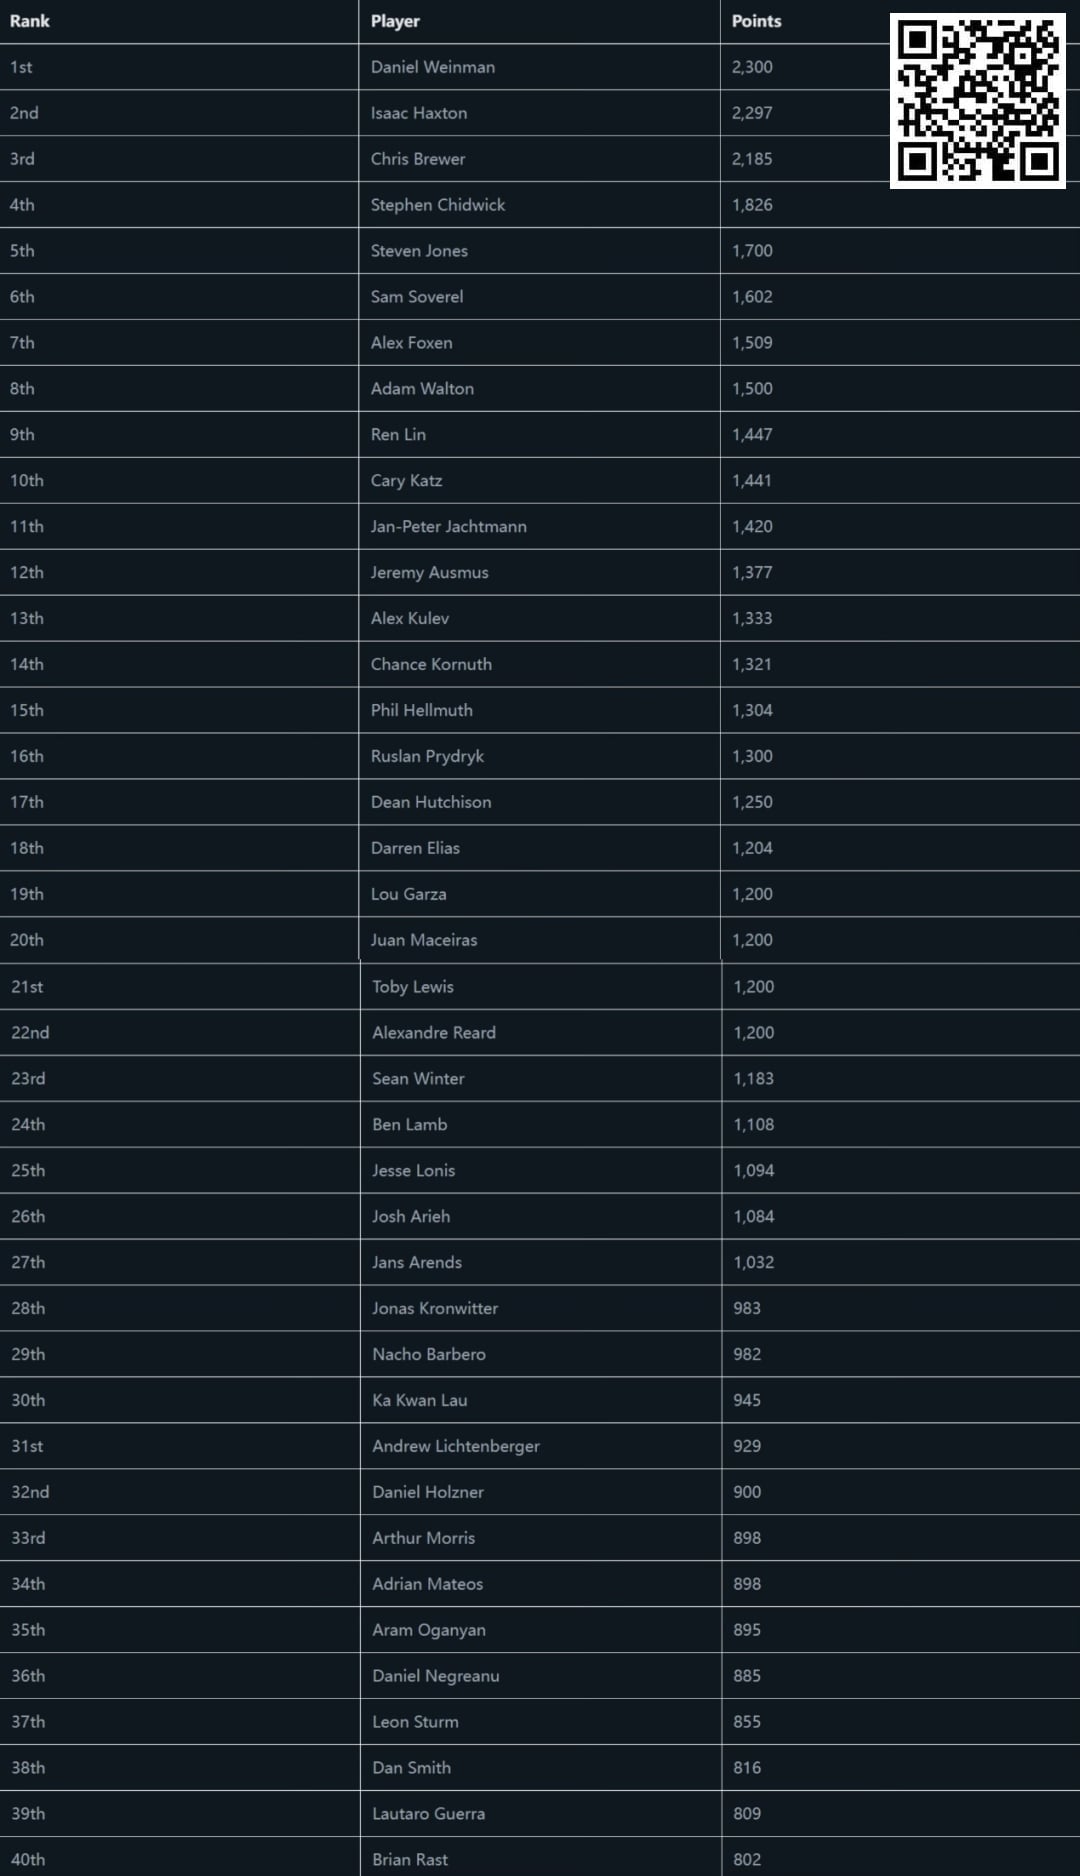 【EV扑克】野人等六位选手确认参加100w美元“一滴水”豪客赛 Isaac Haxton升至PGT排行榜第二名